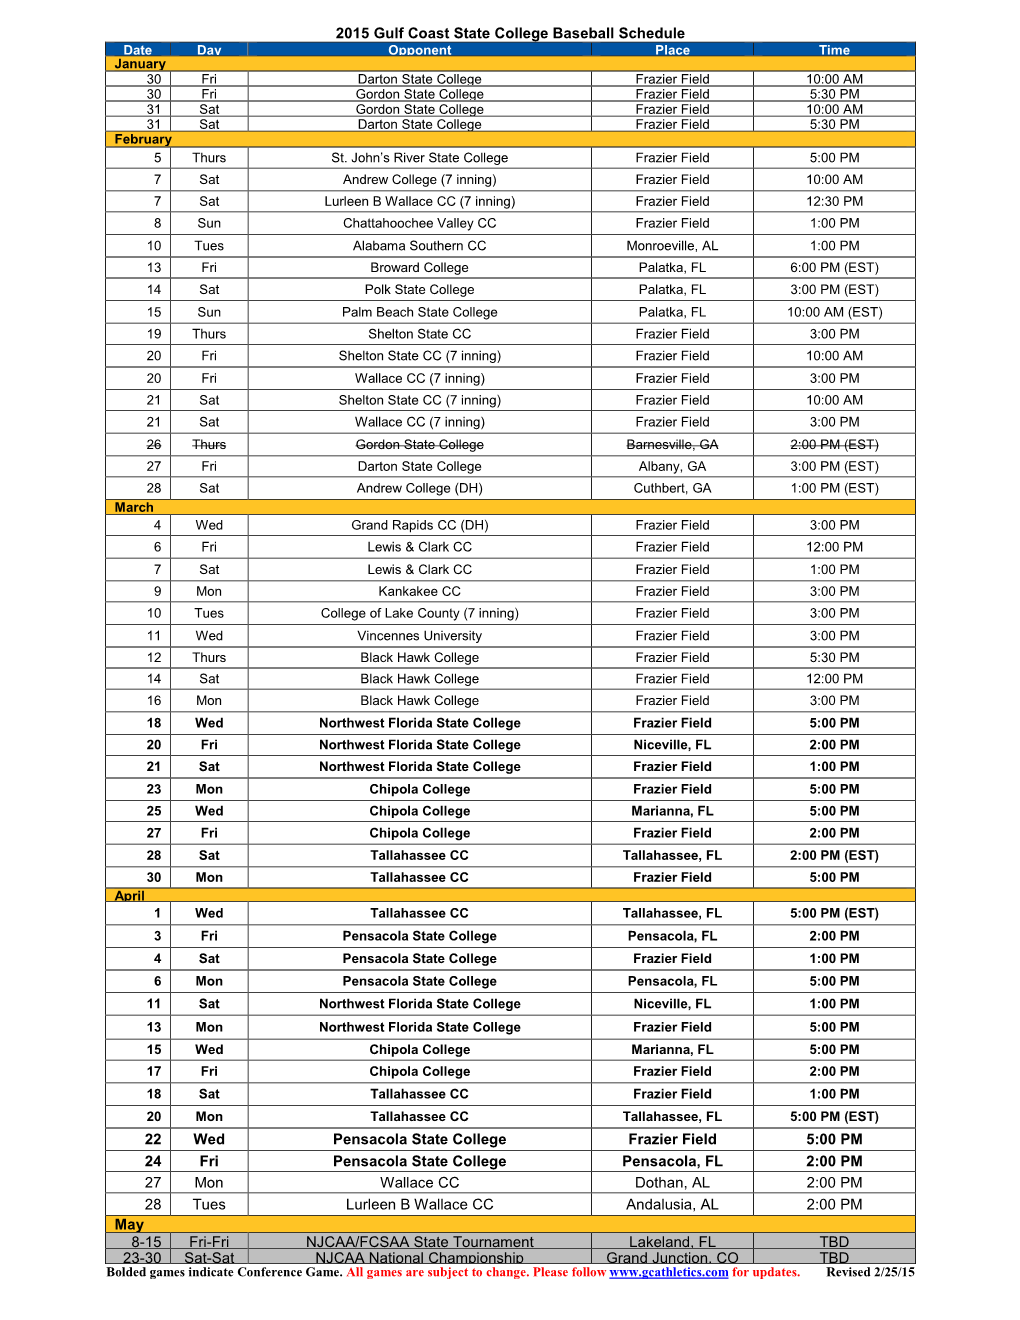 2015 Gulf Coast State College Baseball Schedule 22 Wed